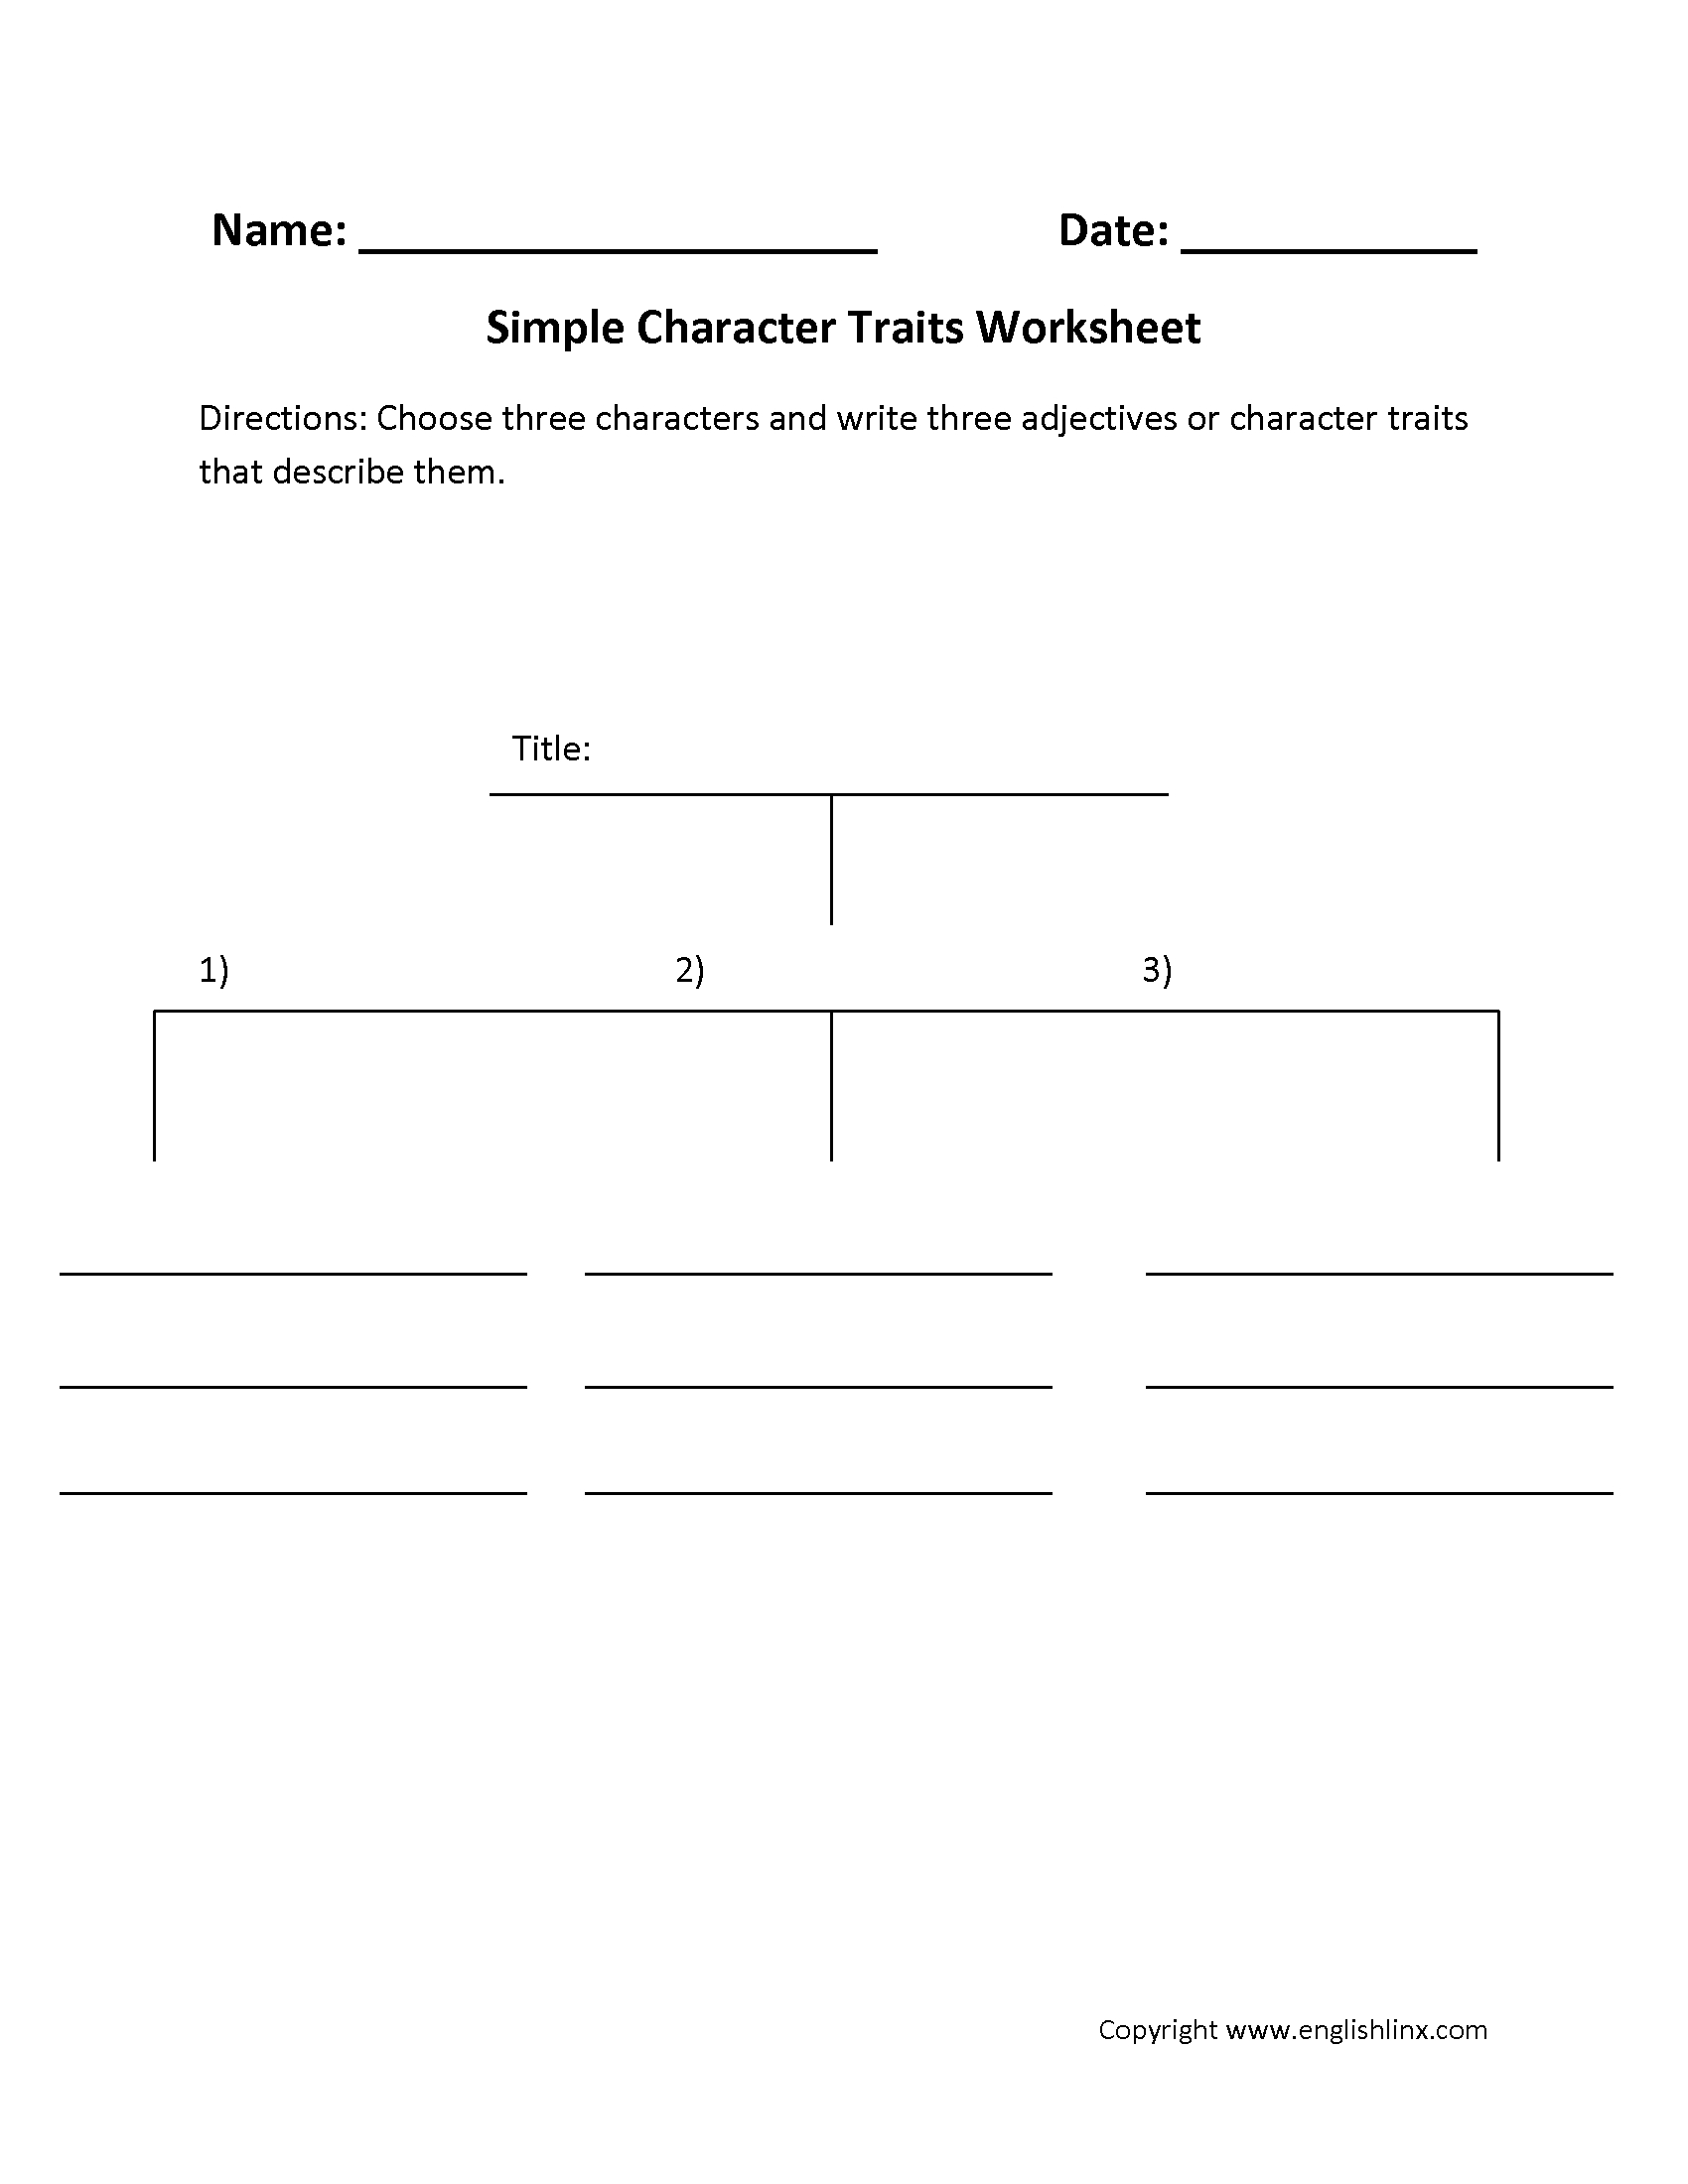 Englishlinx  Character Analysis Worksheets As Well As Character Traits Worksheet Pdf